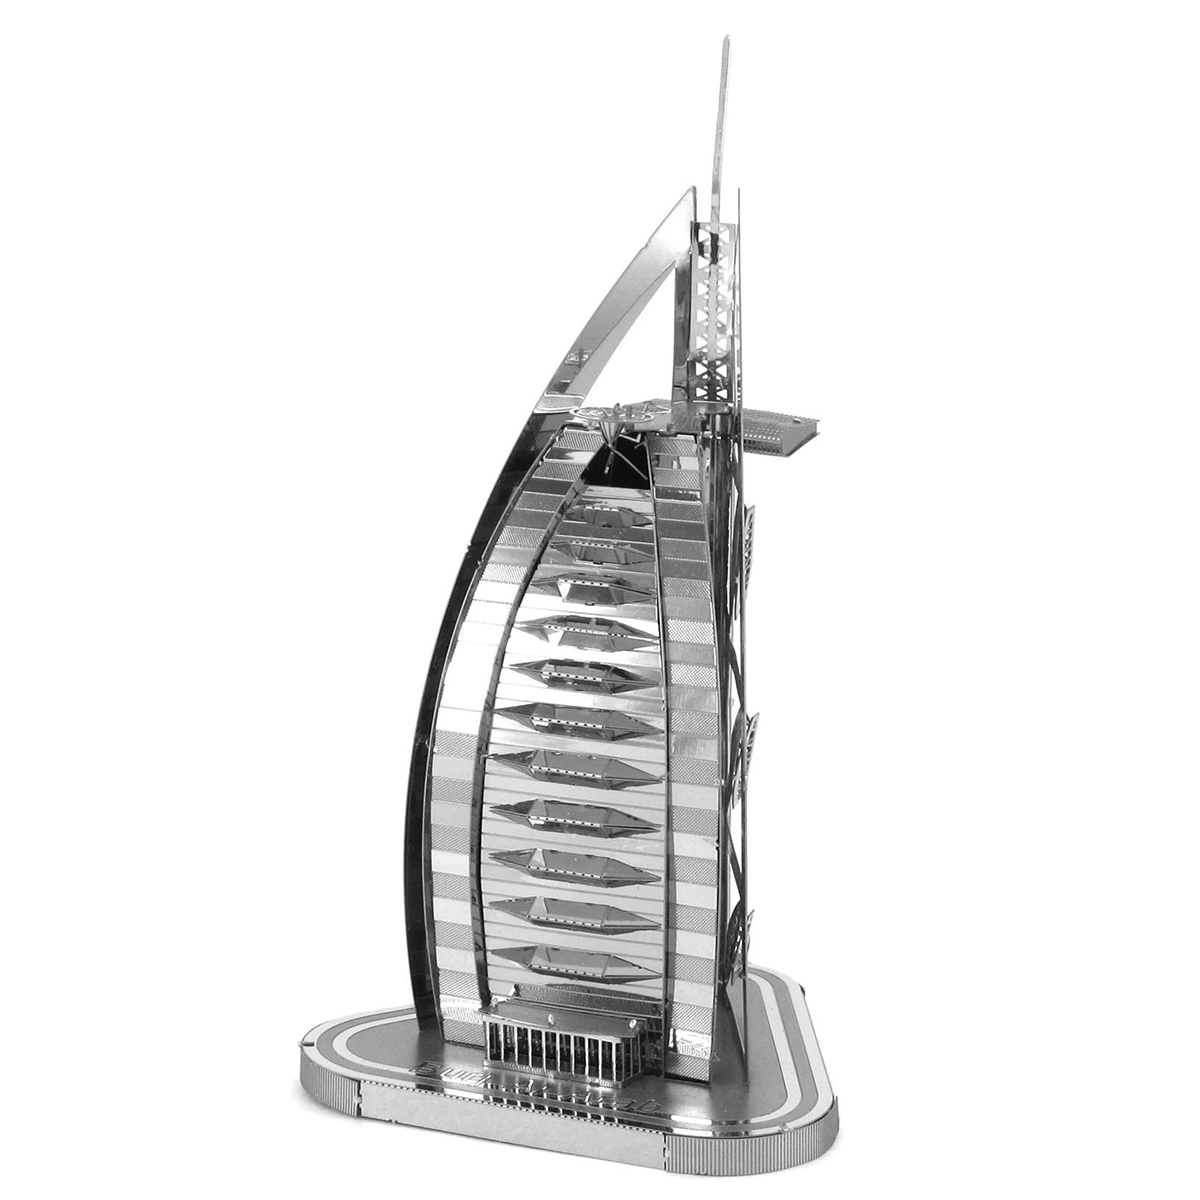 Burj al Arab Dubai UAE 3D Puzzle Metall Modell Laser Cut Bausatz,NEU 